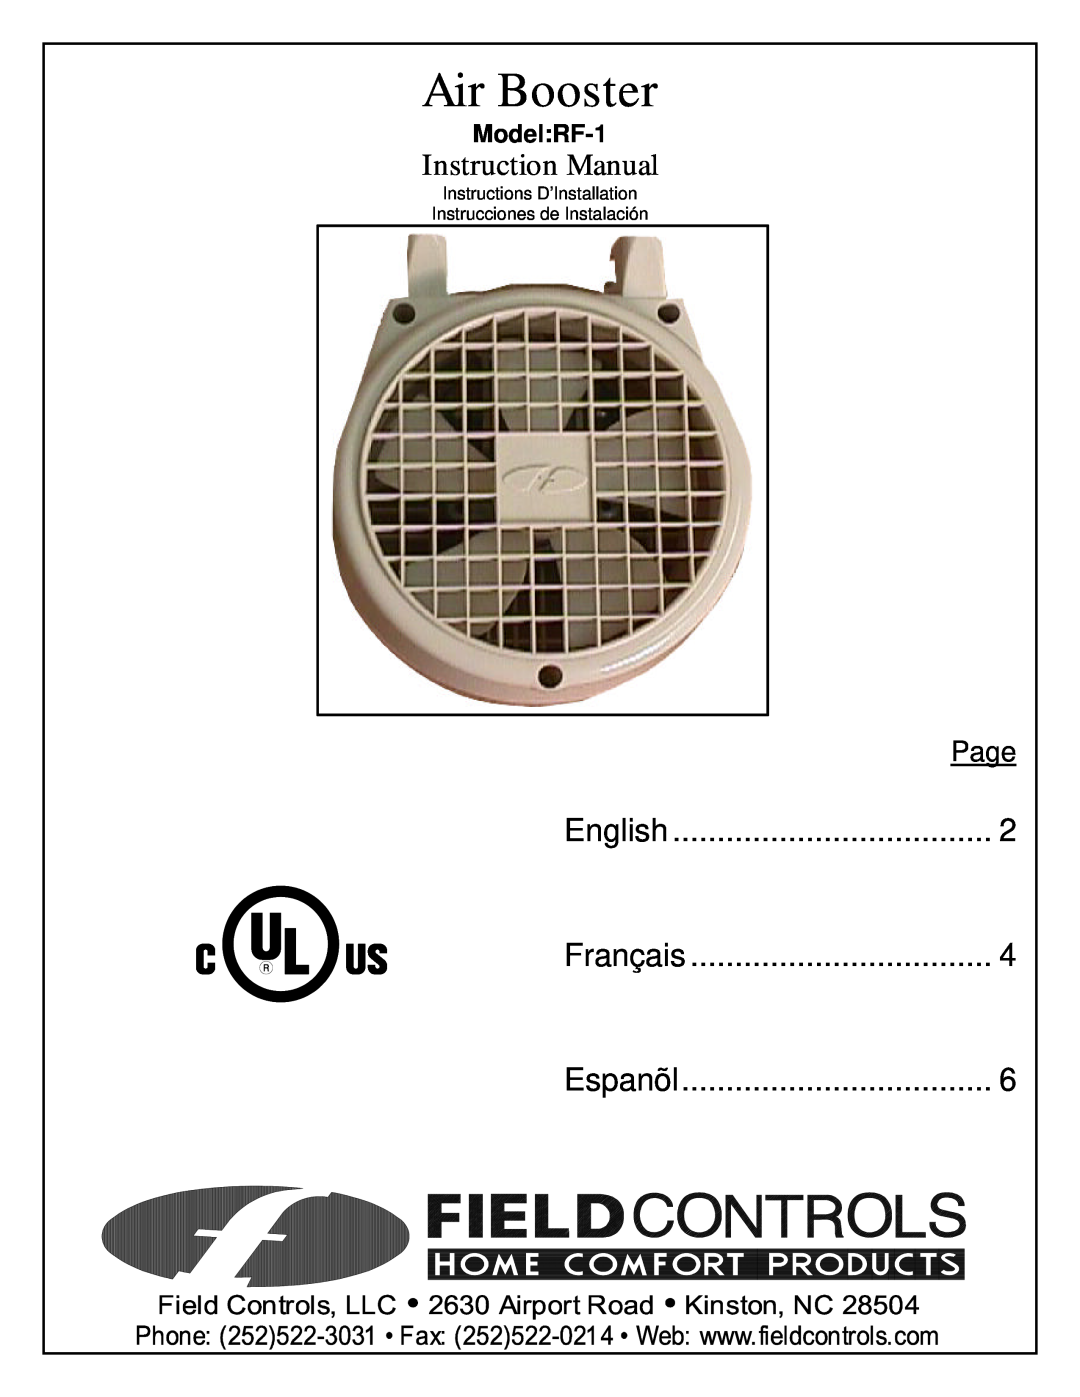 Field Controls instruction manual Air Booster, English, Français, Espanõl, Page, Model RF-1 